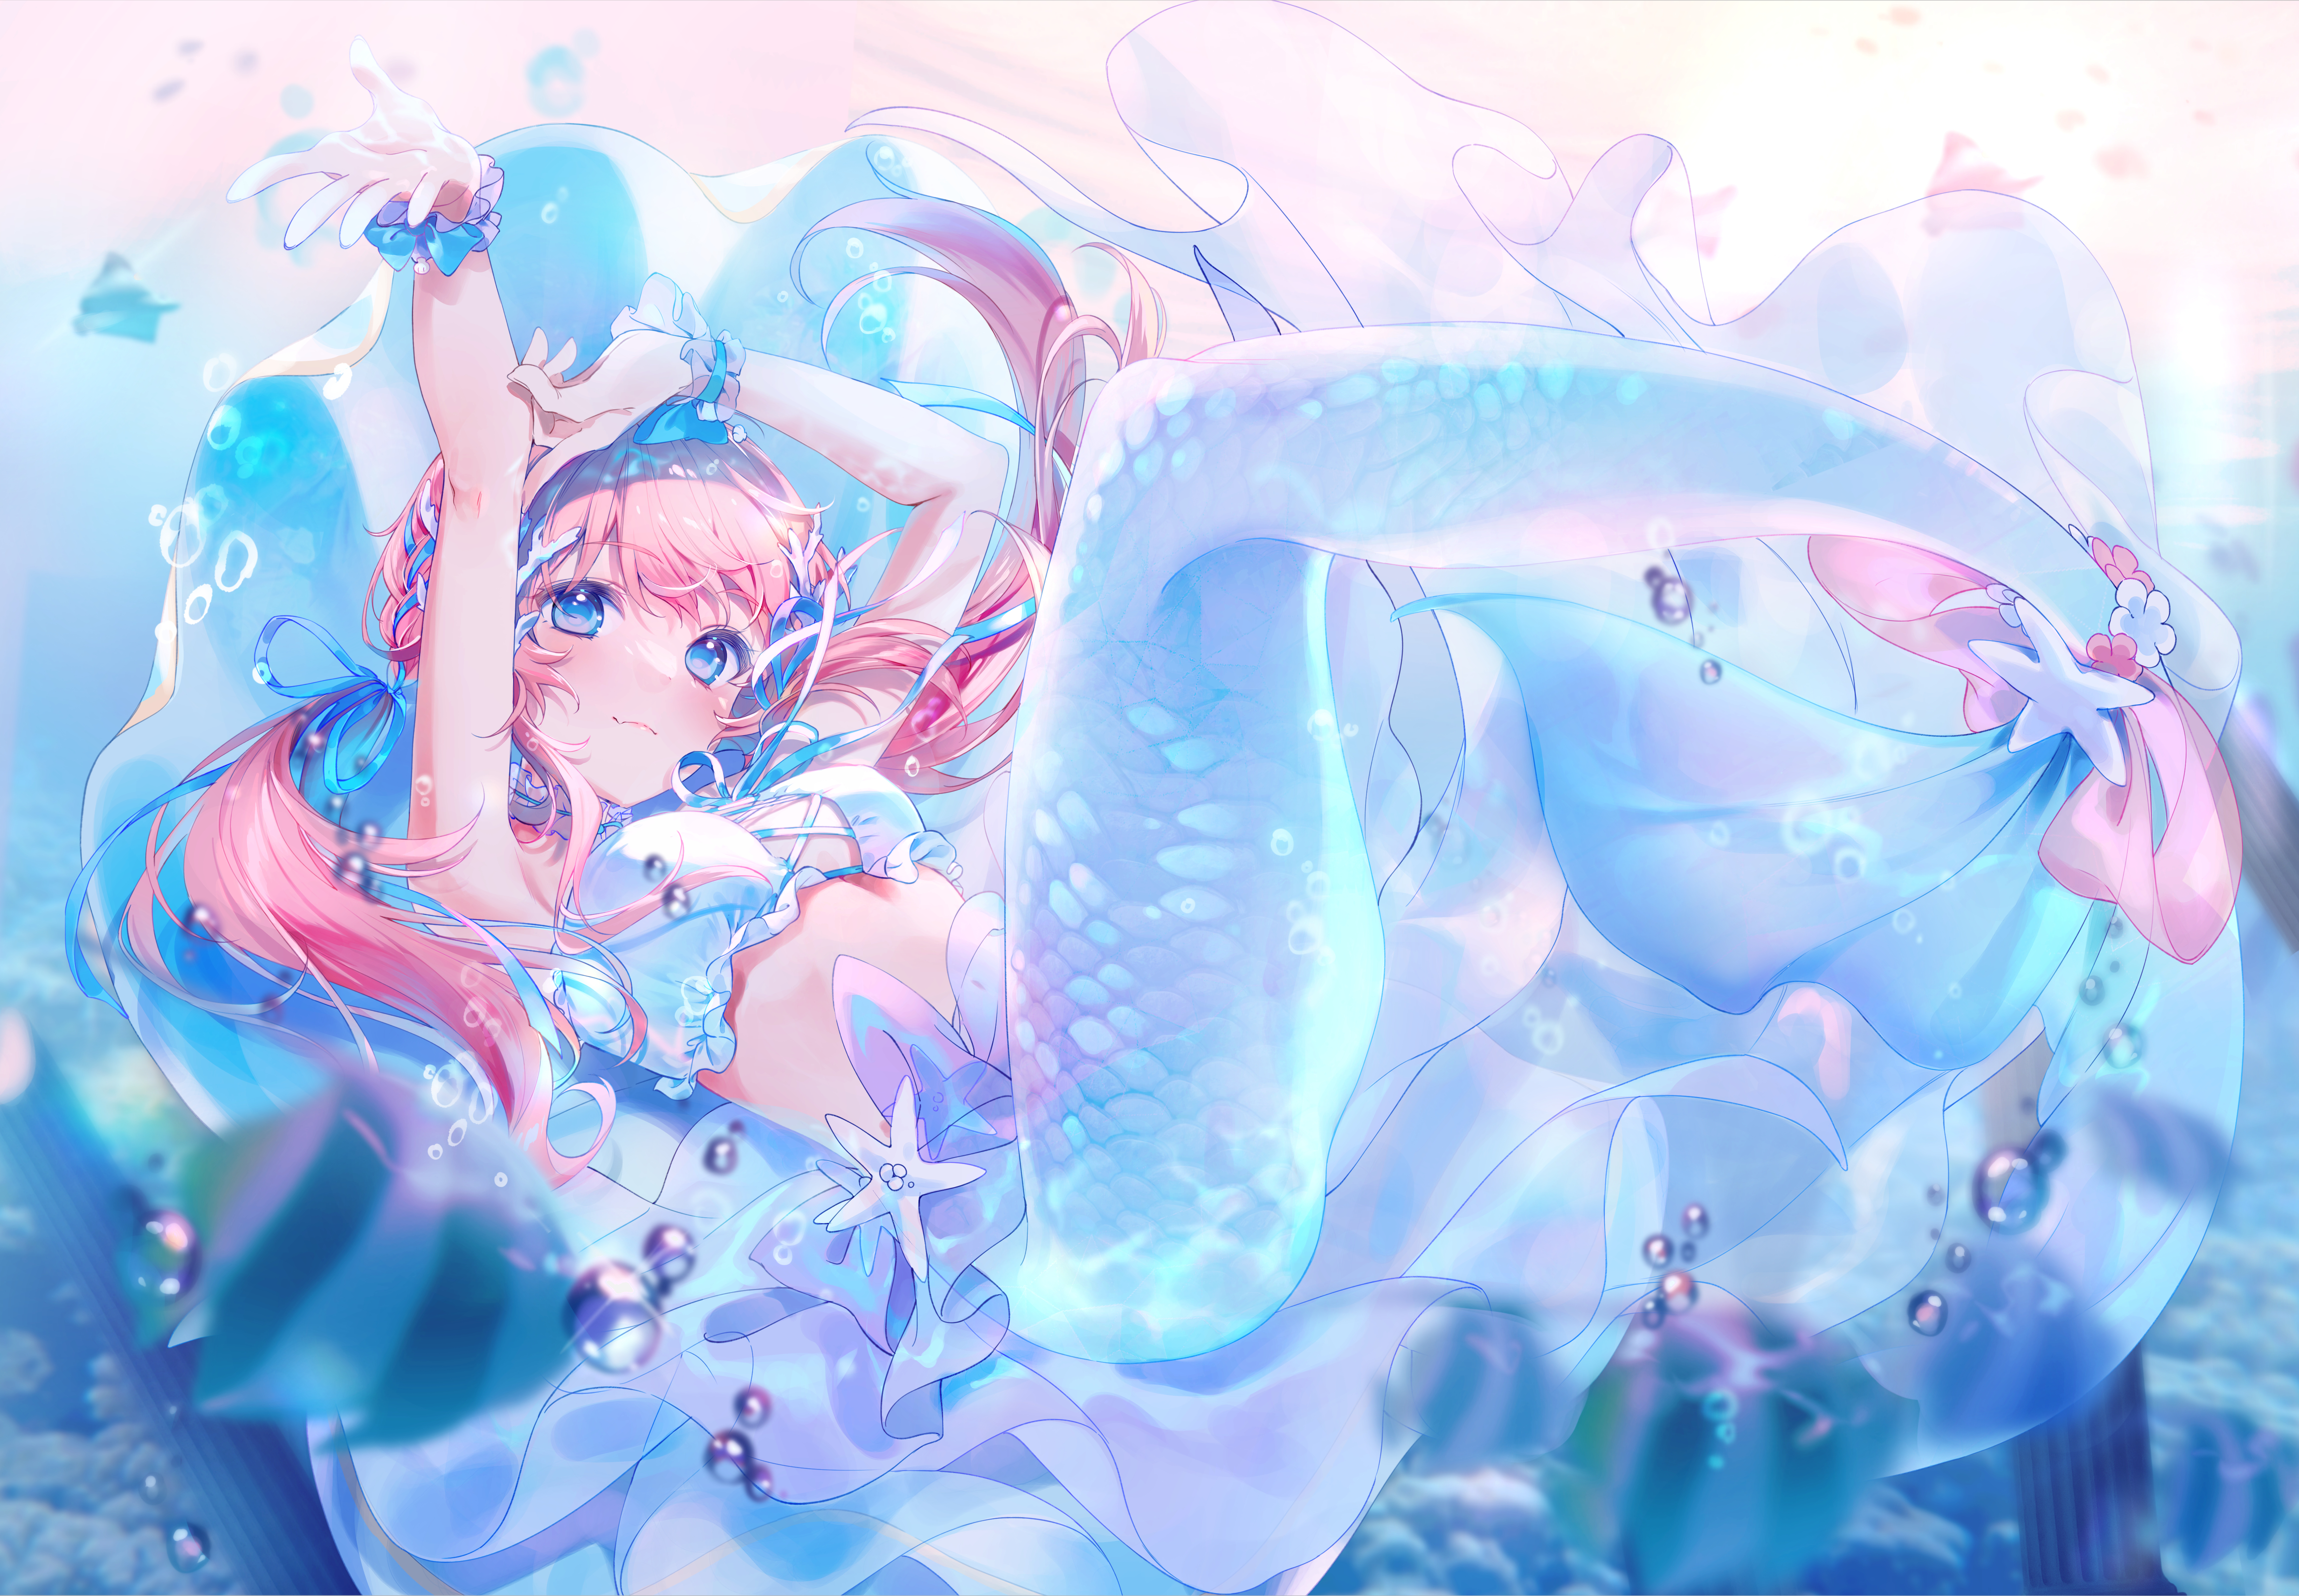 Anime Anime Girls Mermaids Smiling Looking At Viewer Blushing Long Hair Bubbles Tail Underwater Wate 6564x4558